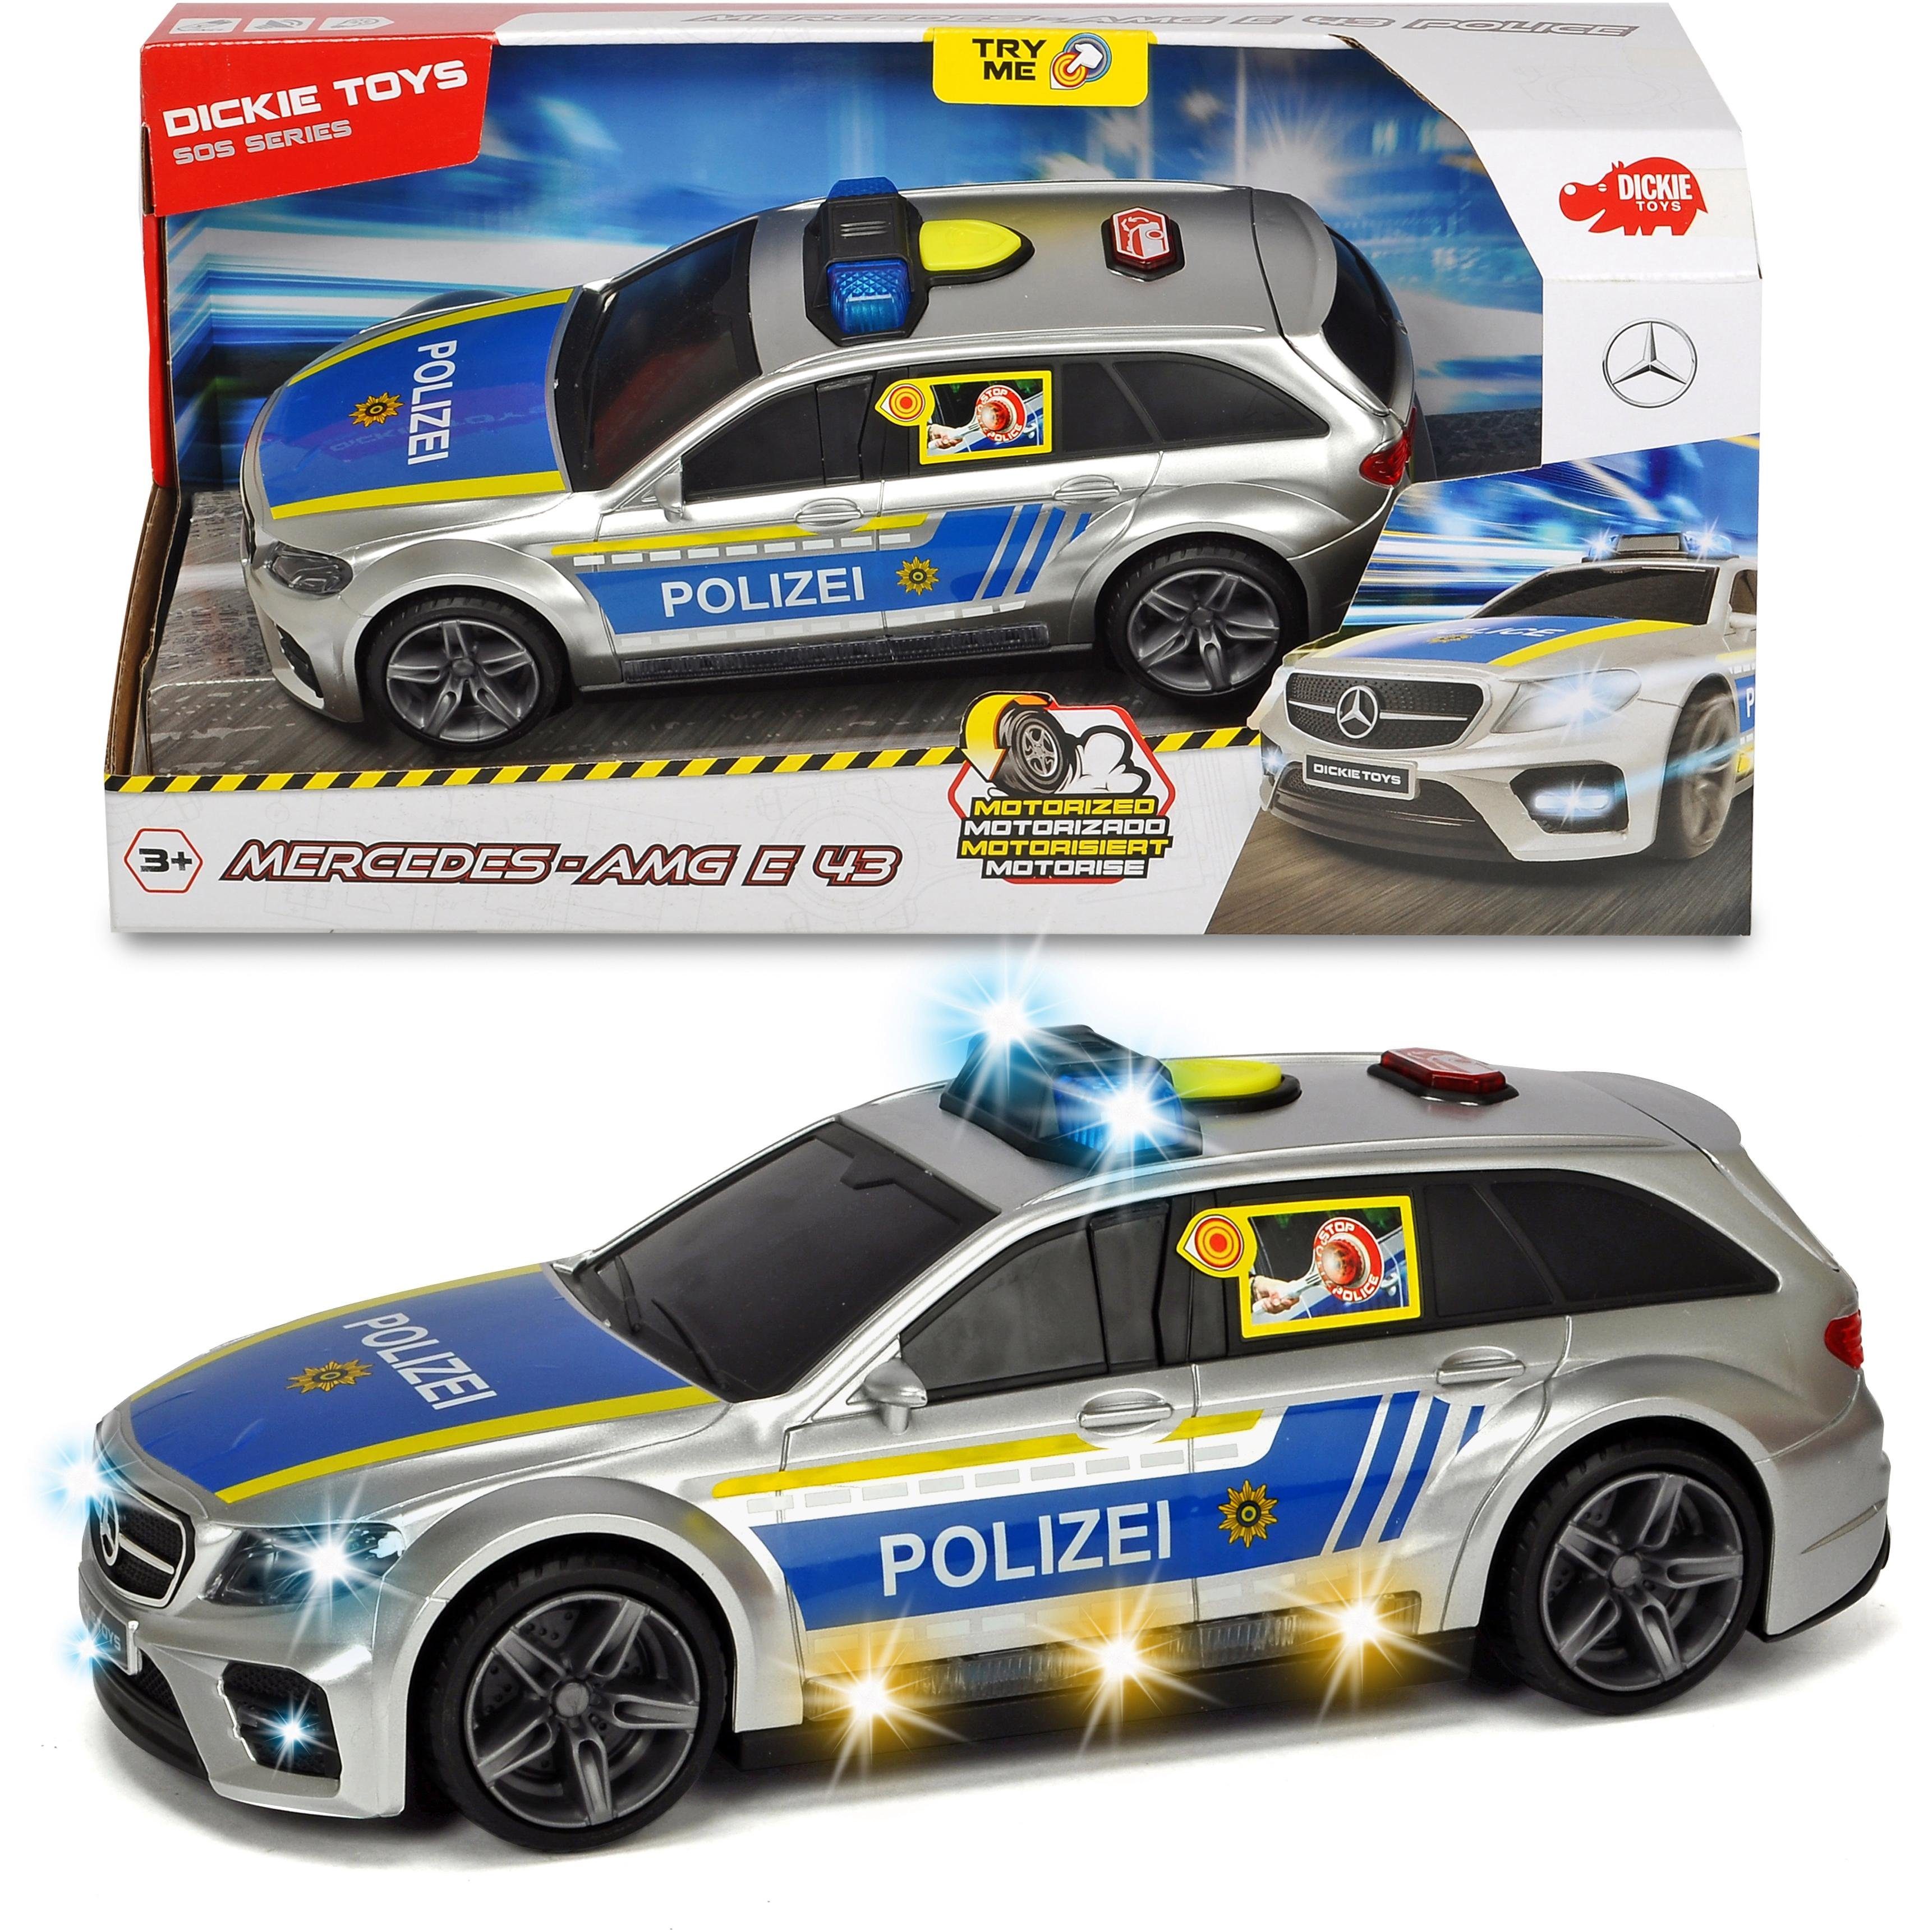  Dickie Toys Mercedes Benz E43 Amg Police - Car...